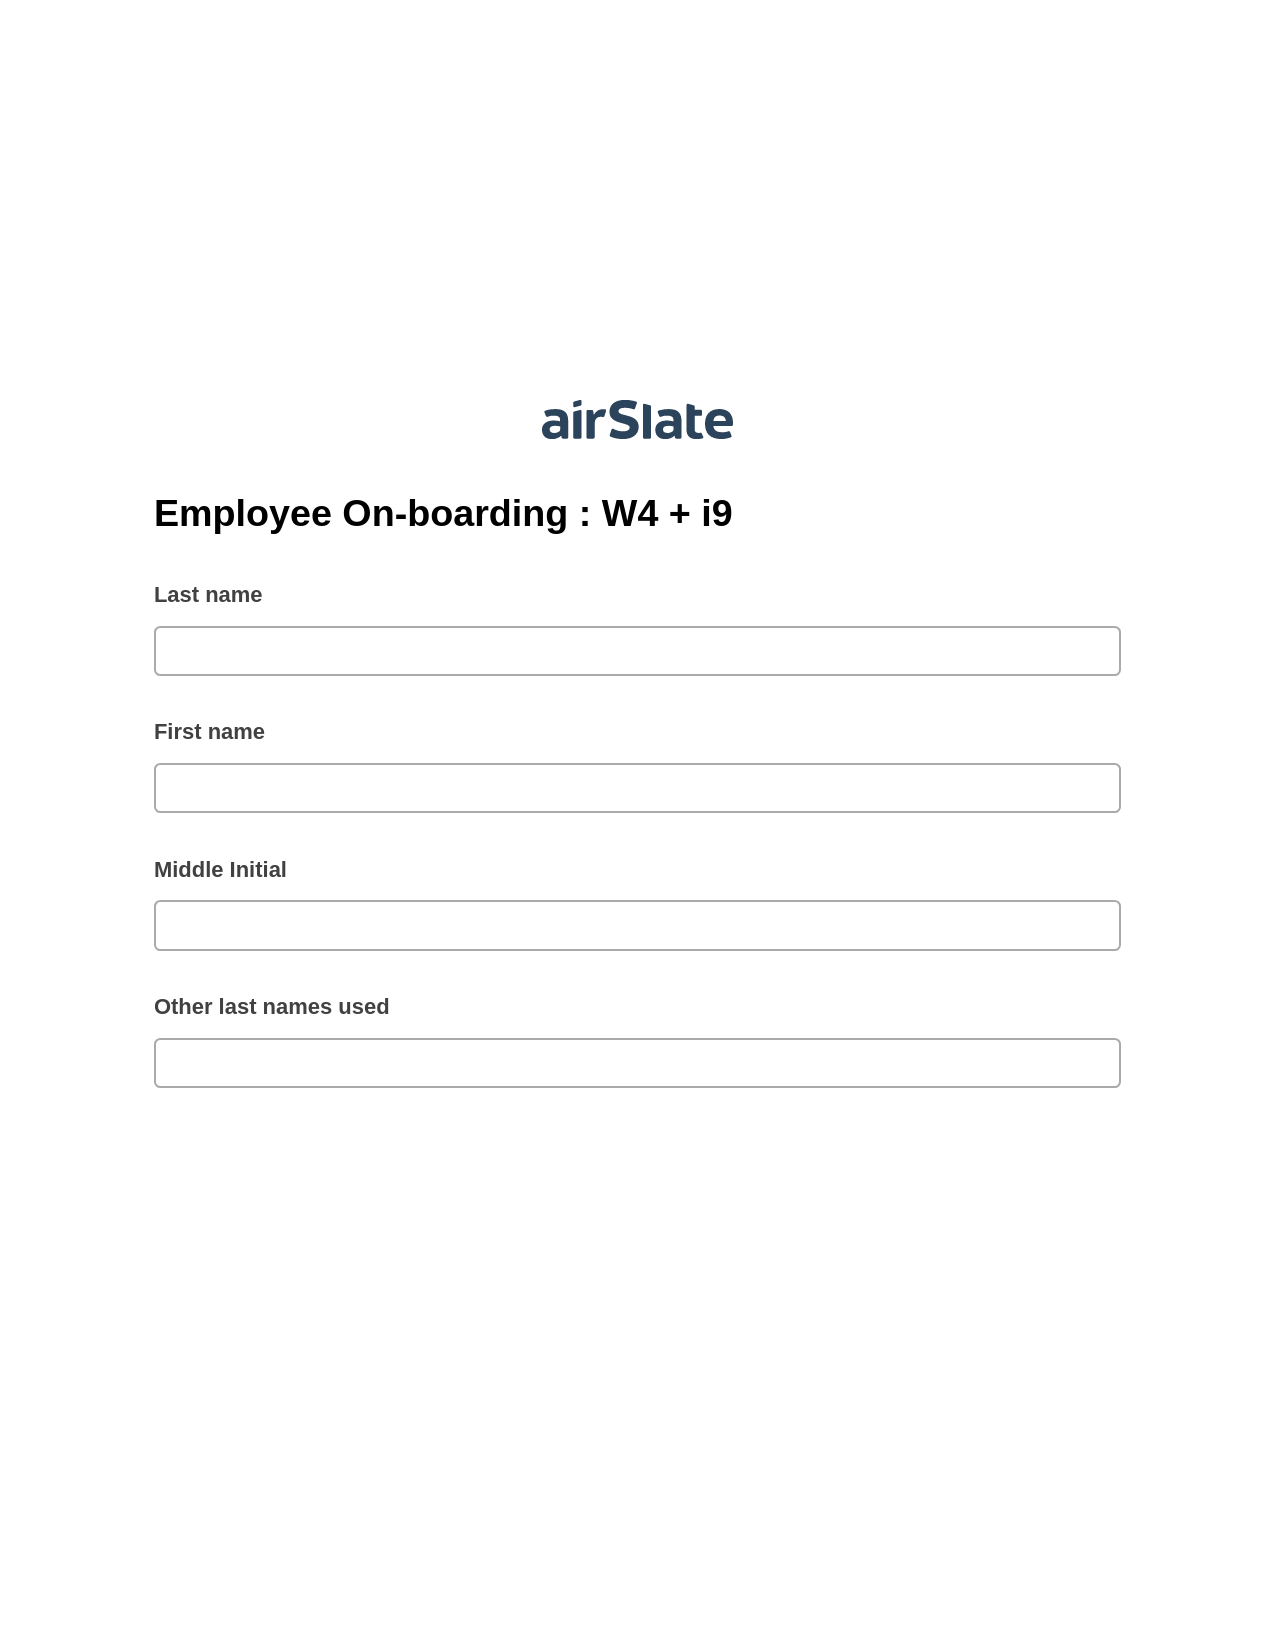 Employee On-boarding : W4 + i9 Pre-fill Slate from MS Dynamics 365 Records Bot, Google Calendar Bot, Dropbox Bot